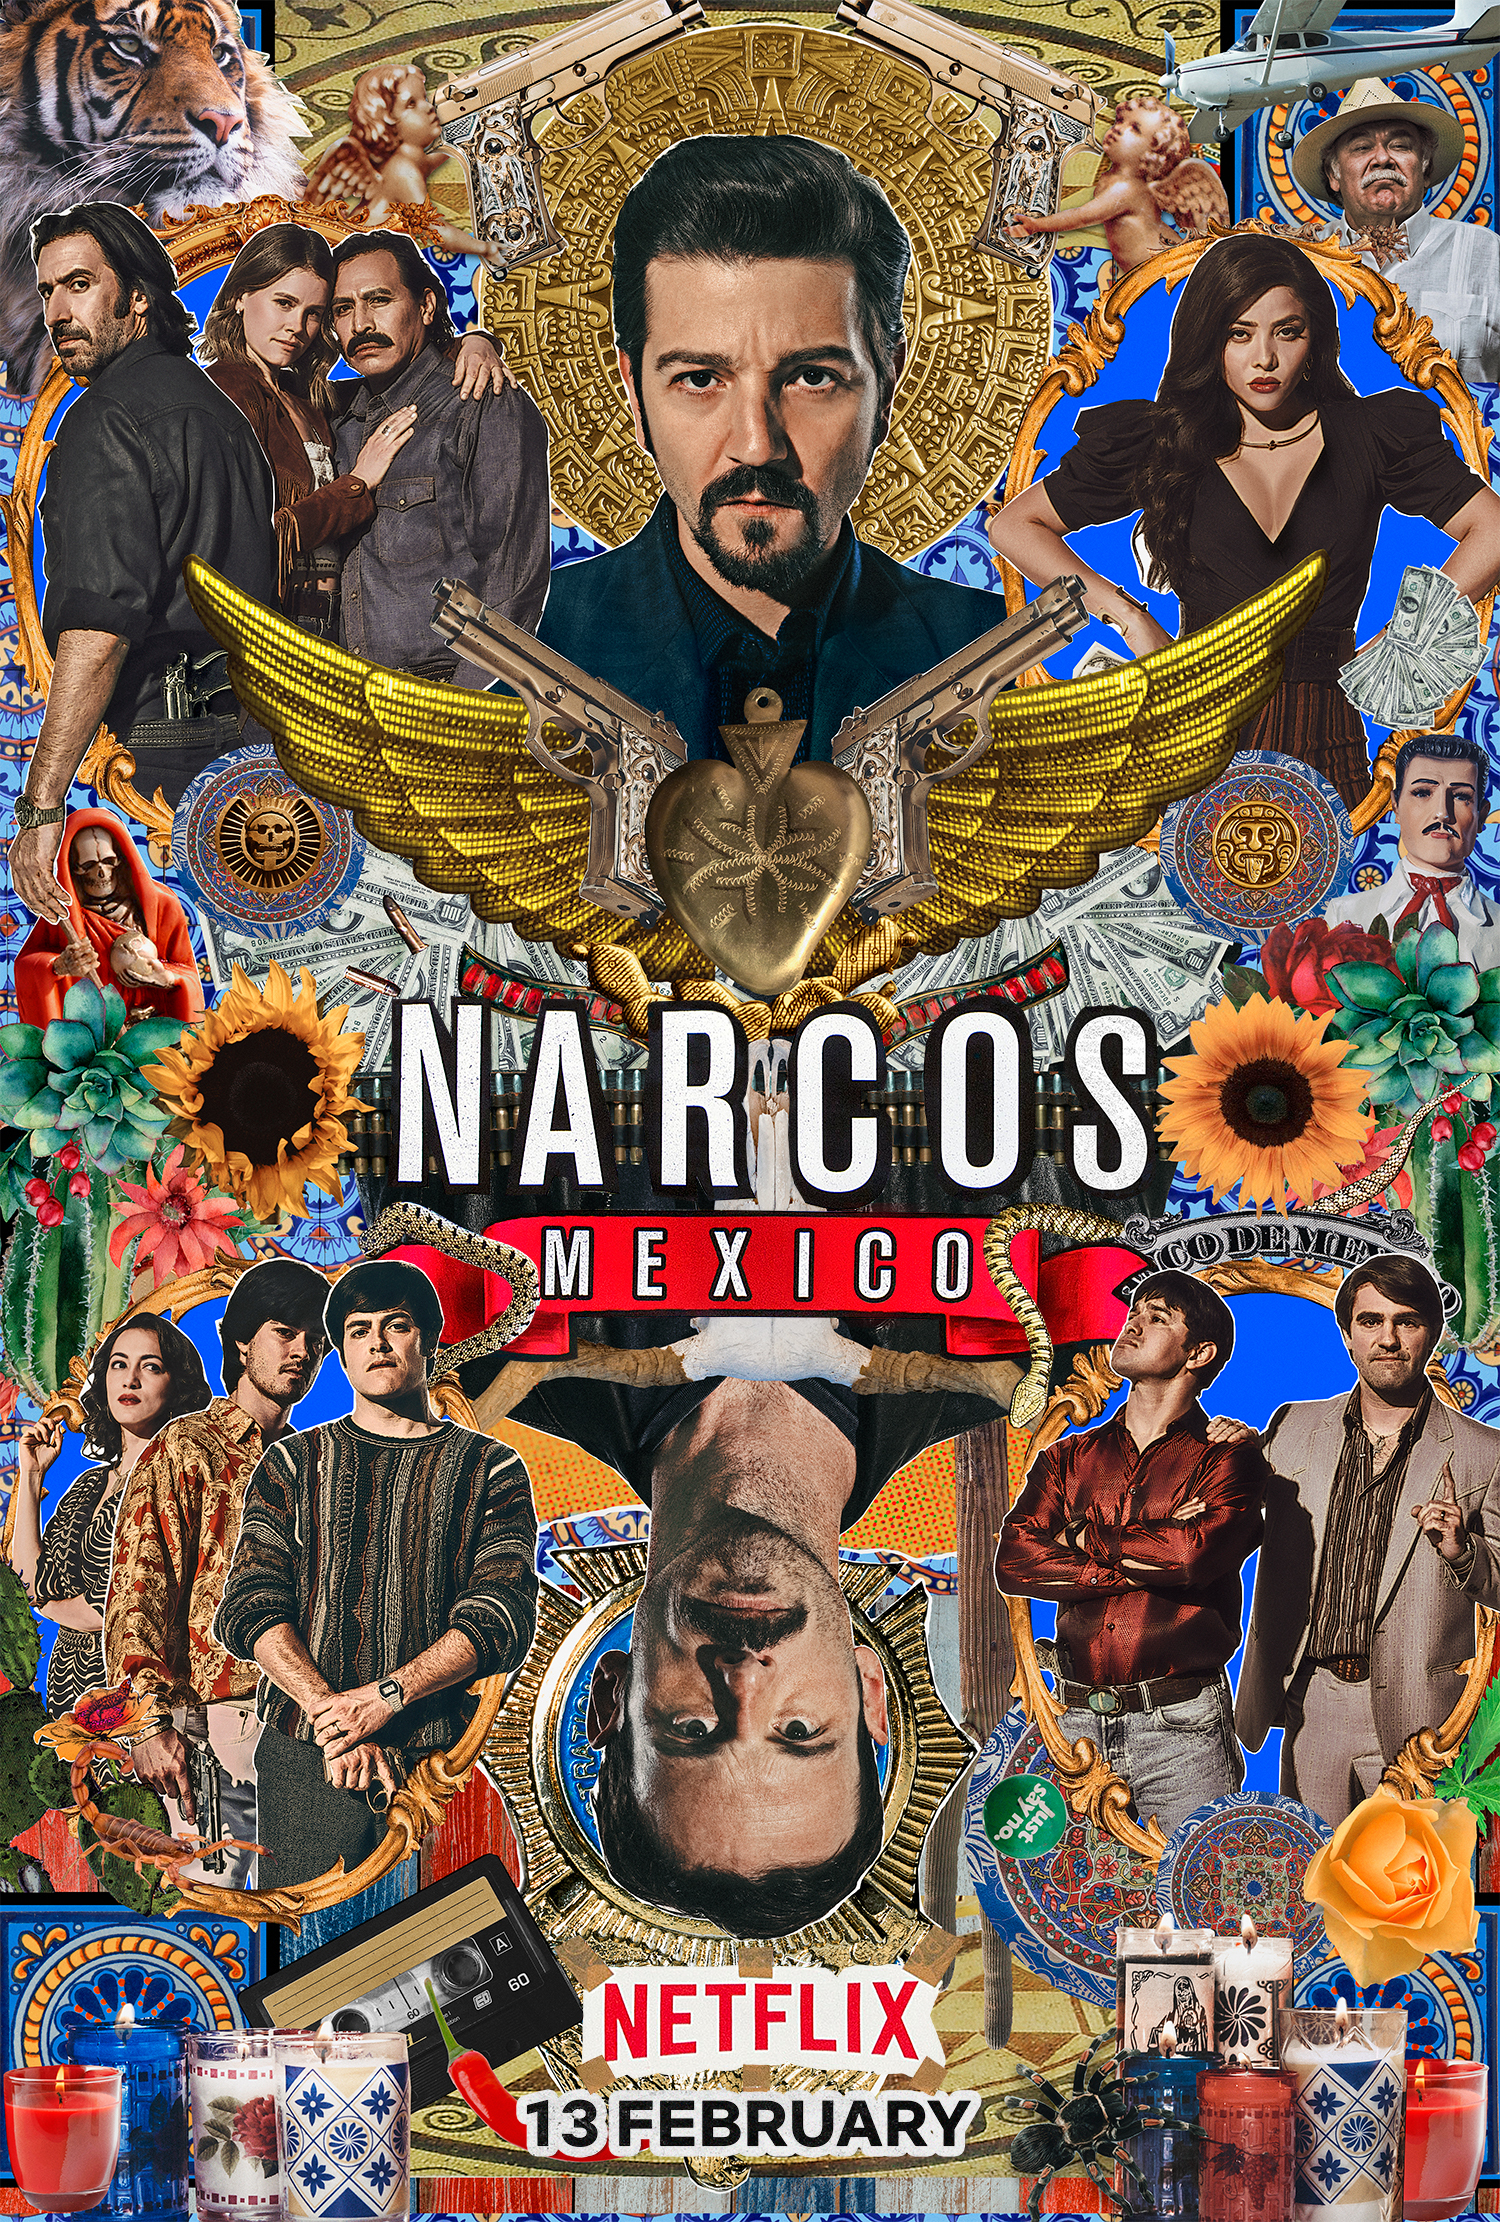 Stiahni si Seriál Narcos: Mexiko / Narcos: Mexico S01E07 (CZ)[WebRip][1080p] = CSFD 86%